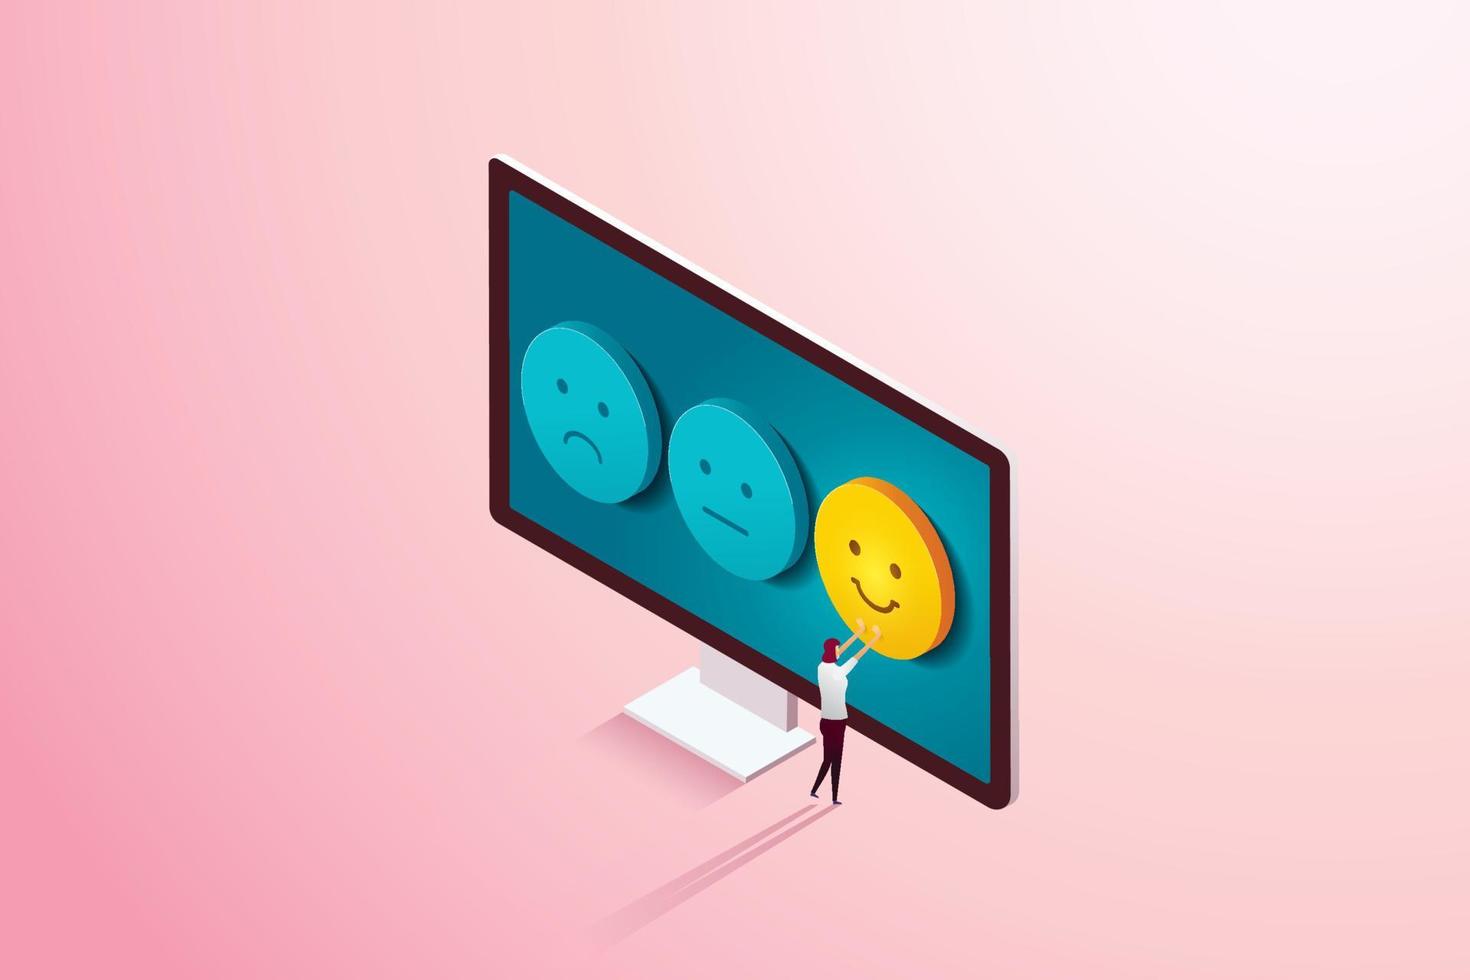 Customer chooses a happy face emoticon on computer. vector